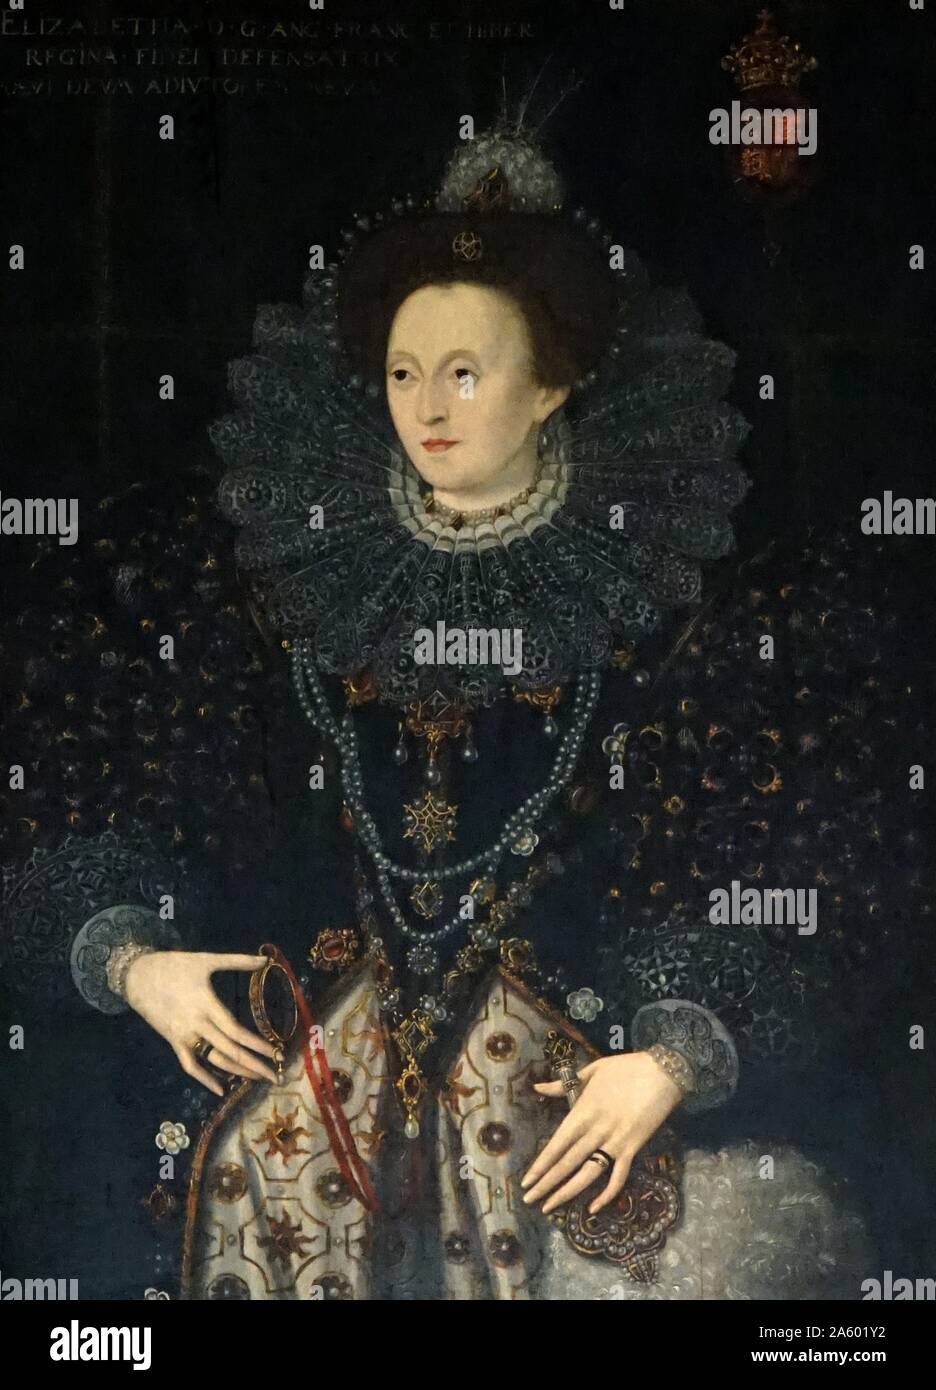 Retrato de la reina Isabel I de Inglaterra reinó 1558-1603. Siglo xvi, artista desconocido. Casa; Charlecote Warwickshire, Inglaterra Foto de stock